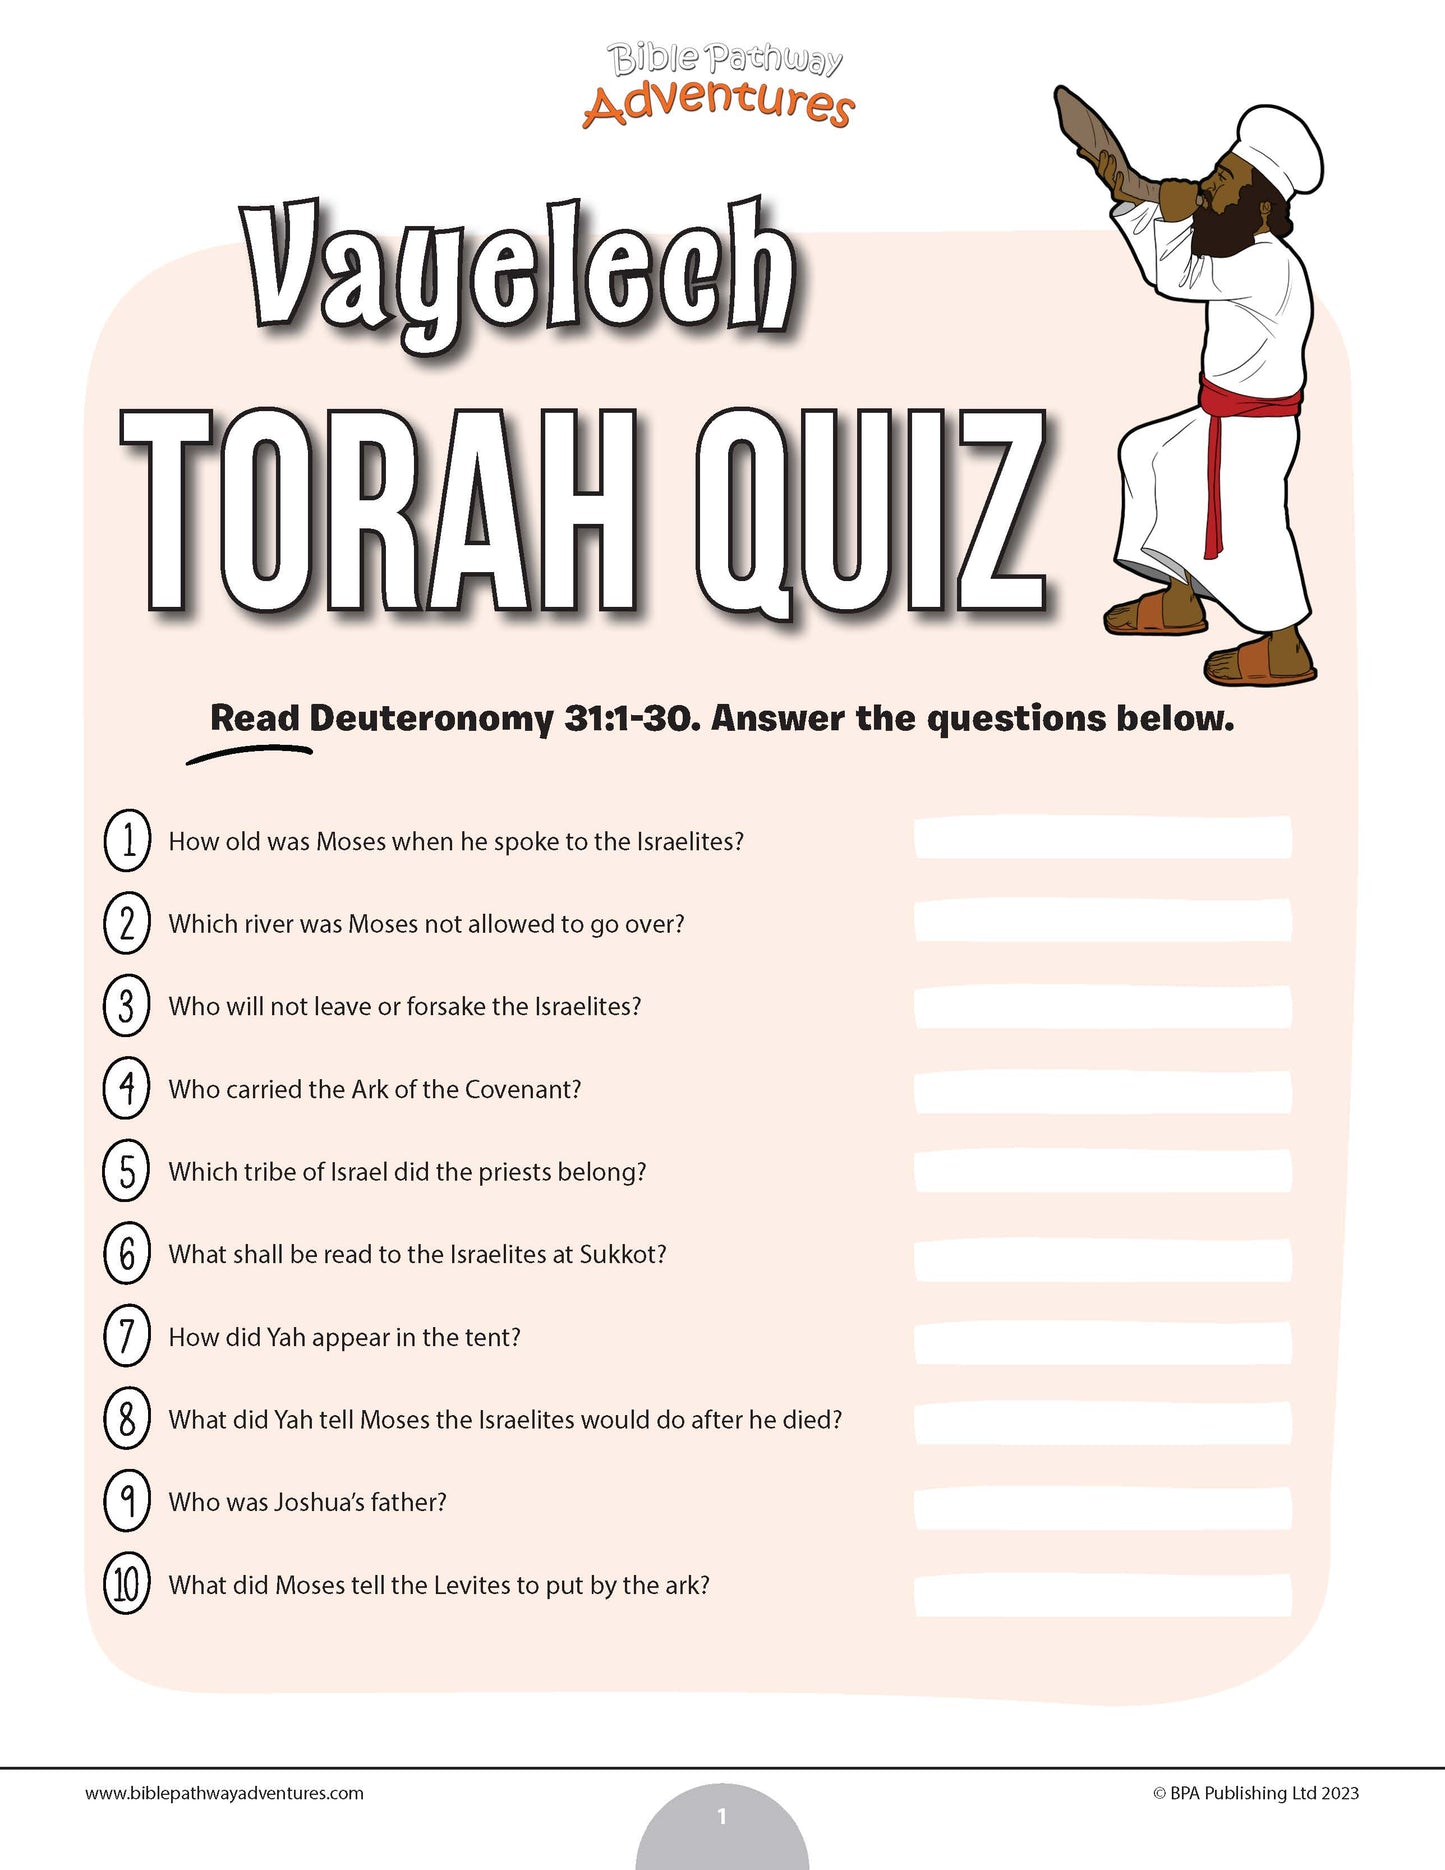 Vayelech Torah quiz